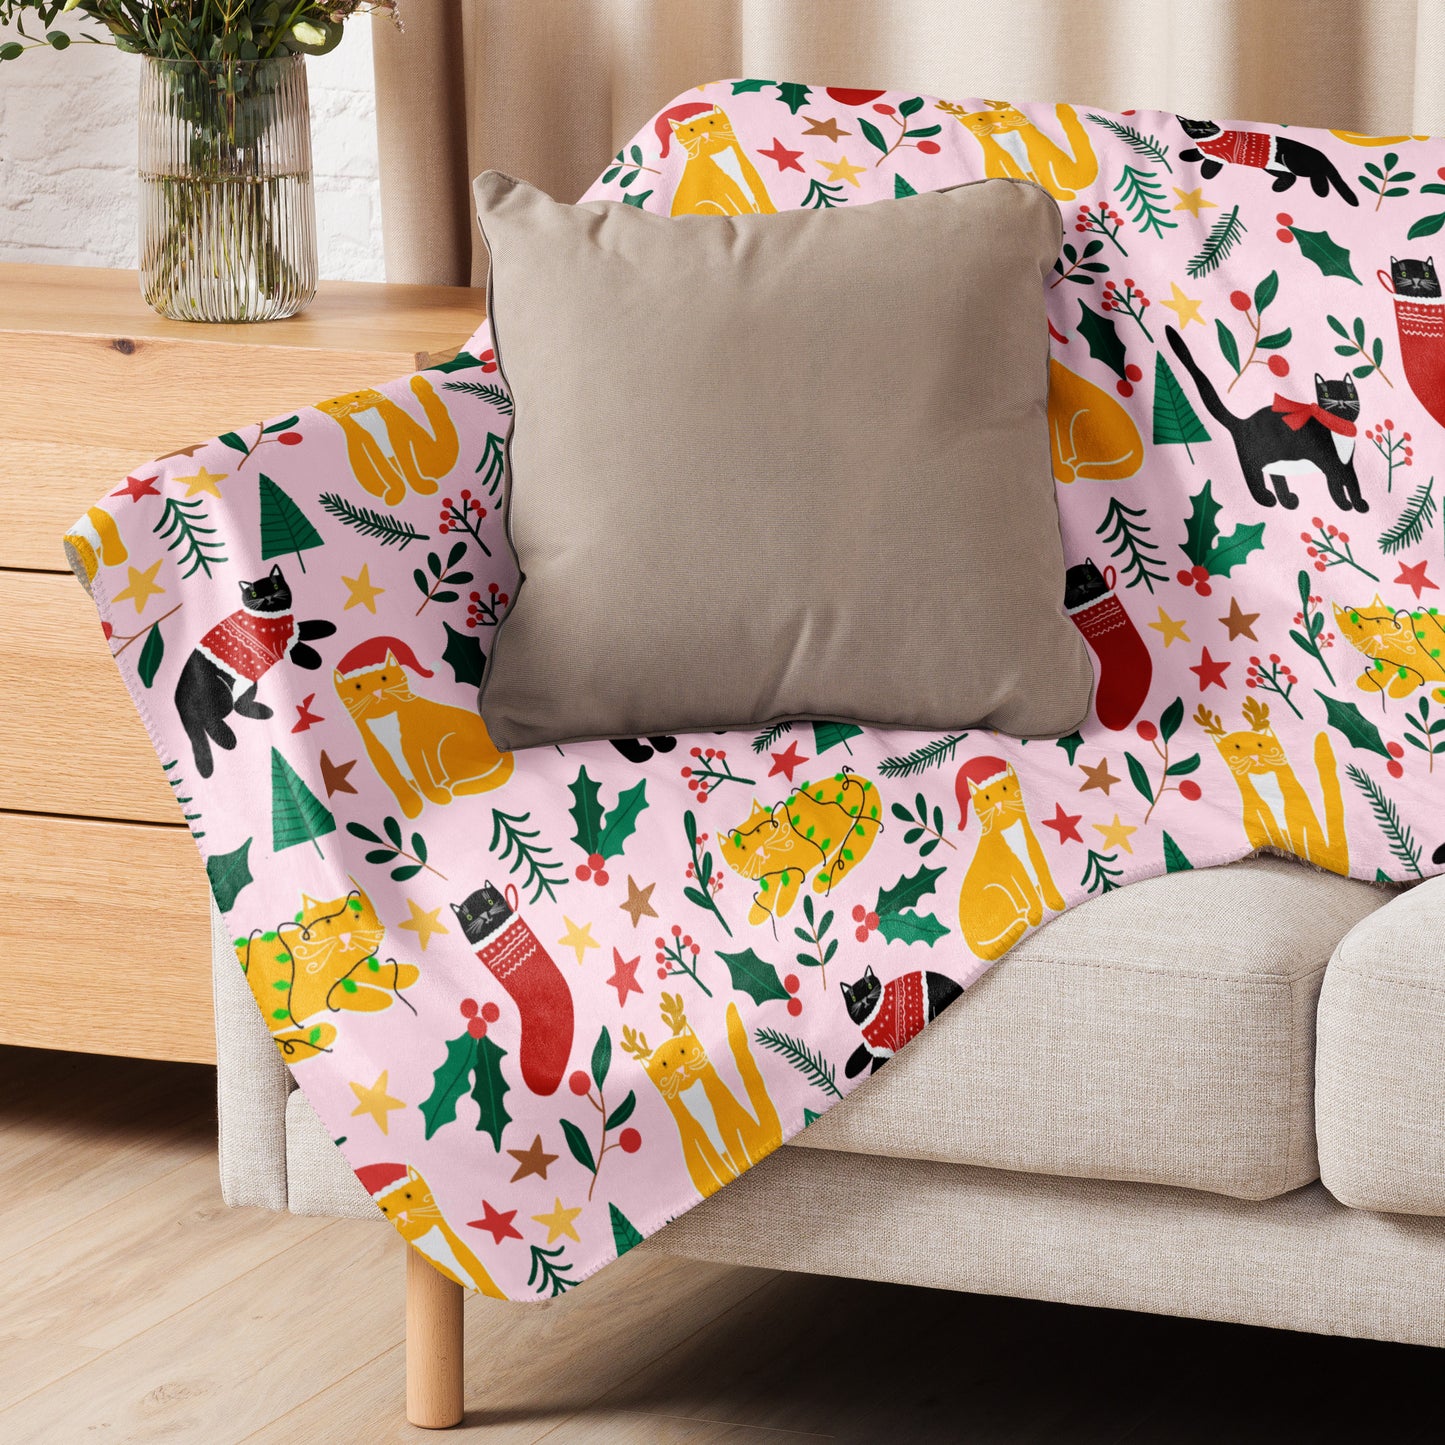 Super Soft Blanket - Joulukissat / Christmas Cats - Blankets- Print N Stuff - [designed in Turku Finland]